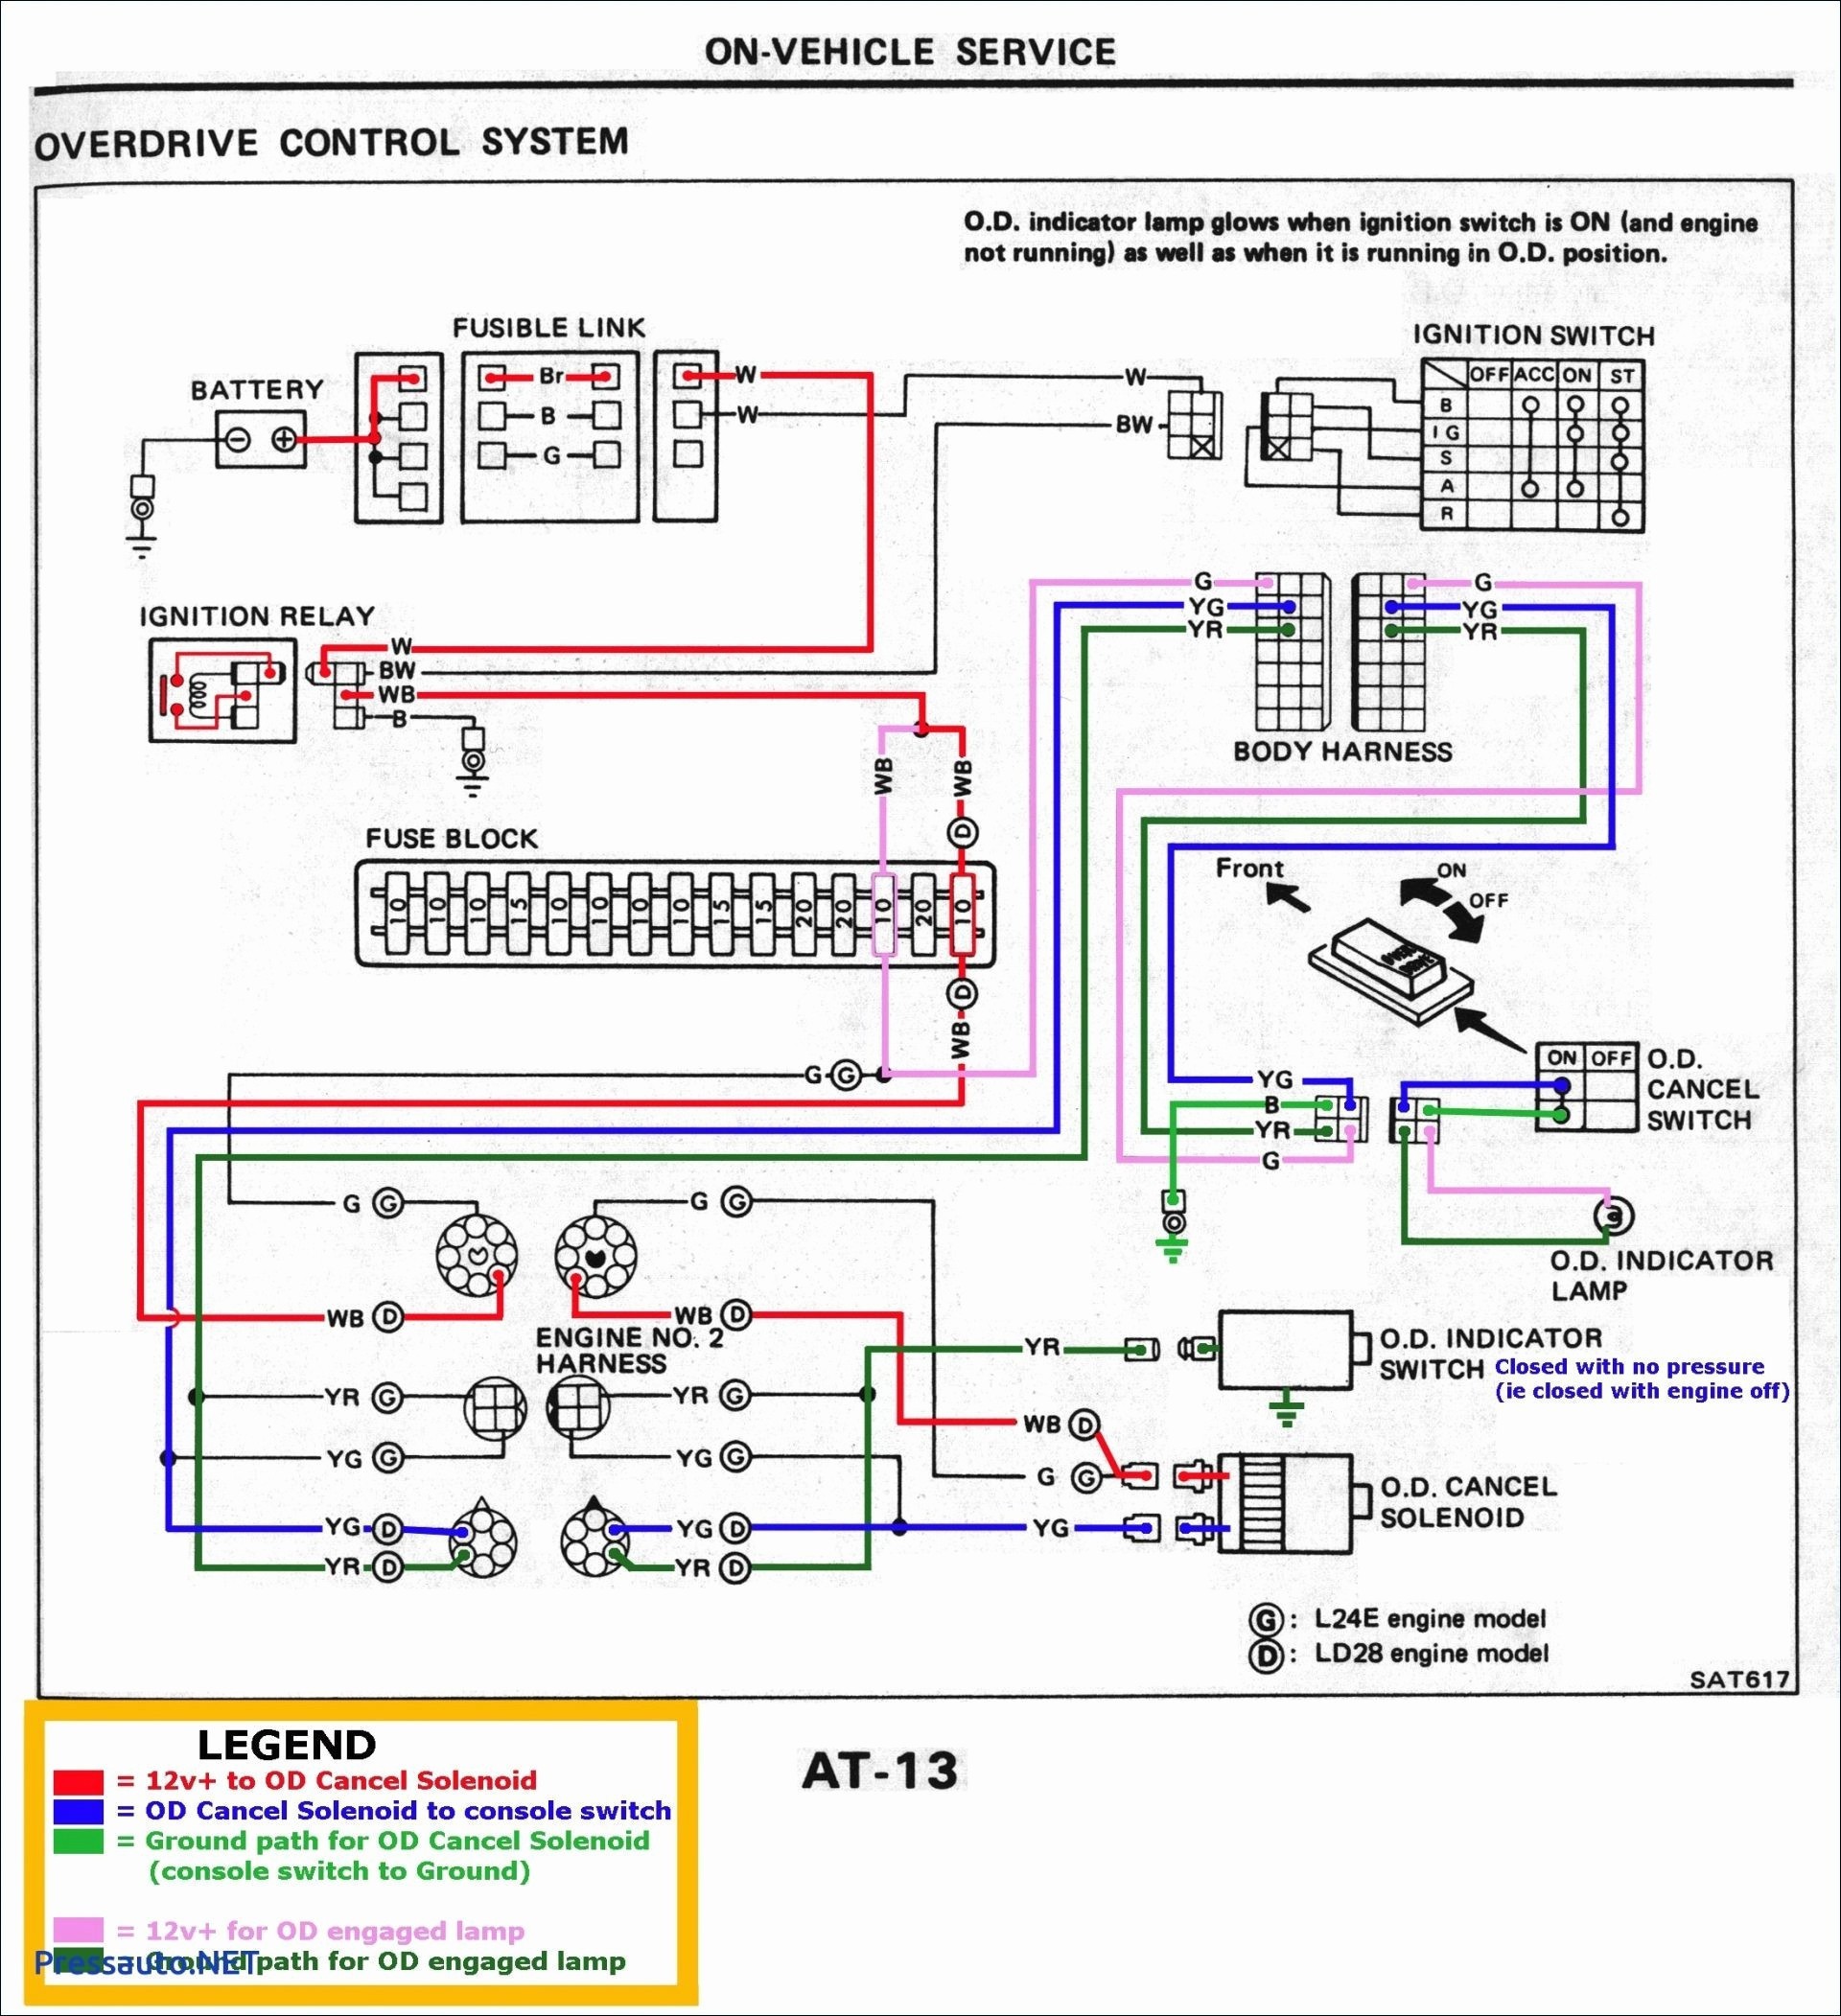 2002 Gmc sonoma Engine Diagram 2000 Silverado Horn Wiring Diagram Free Picture Opinions About Of 2002 Gmc sonoma Engine Diagram